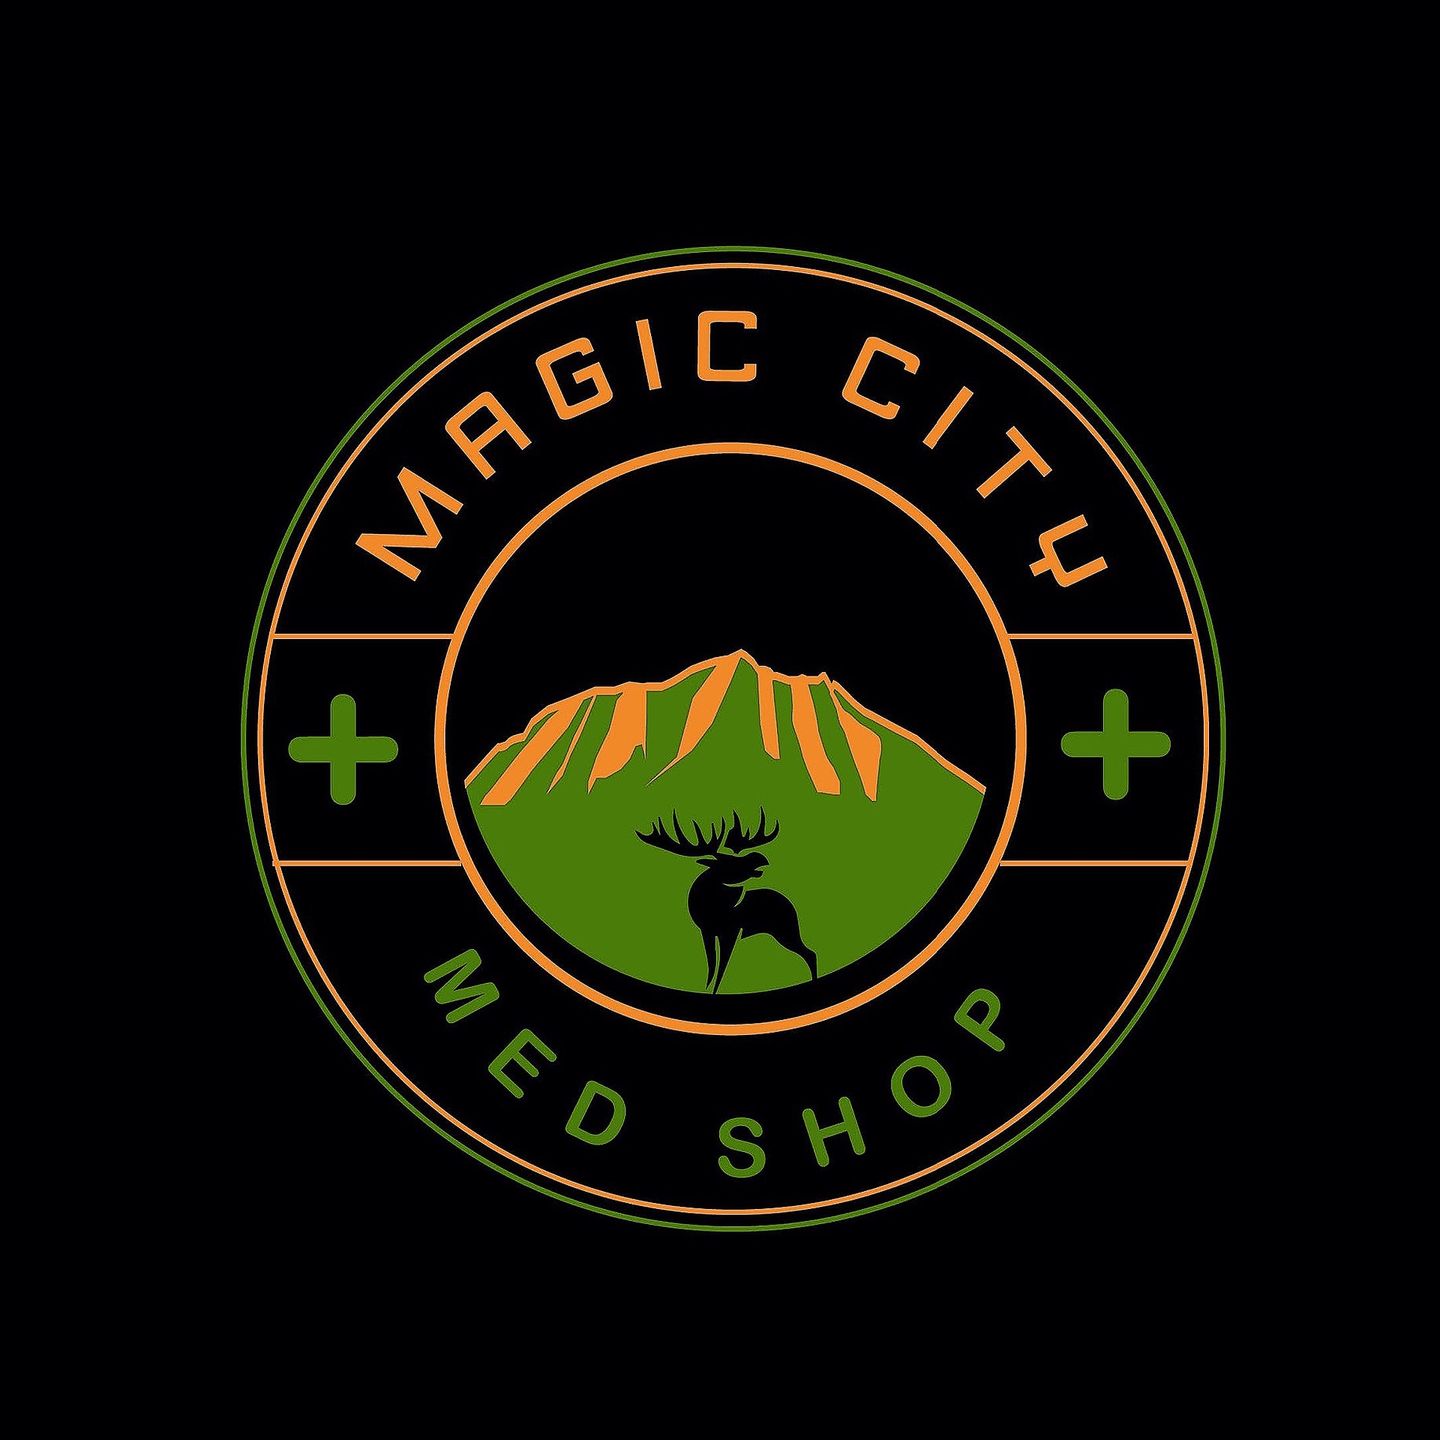 image feature Magic City Med Shop